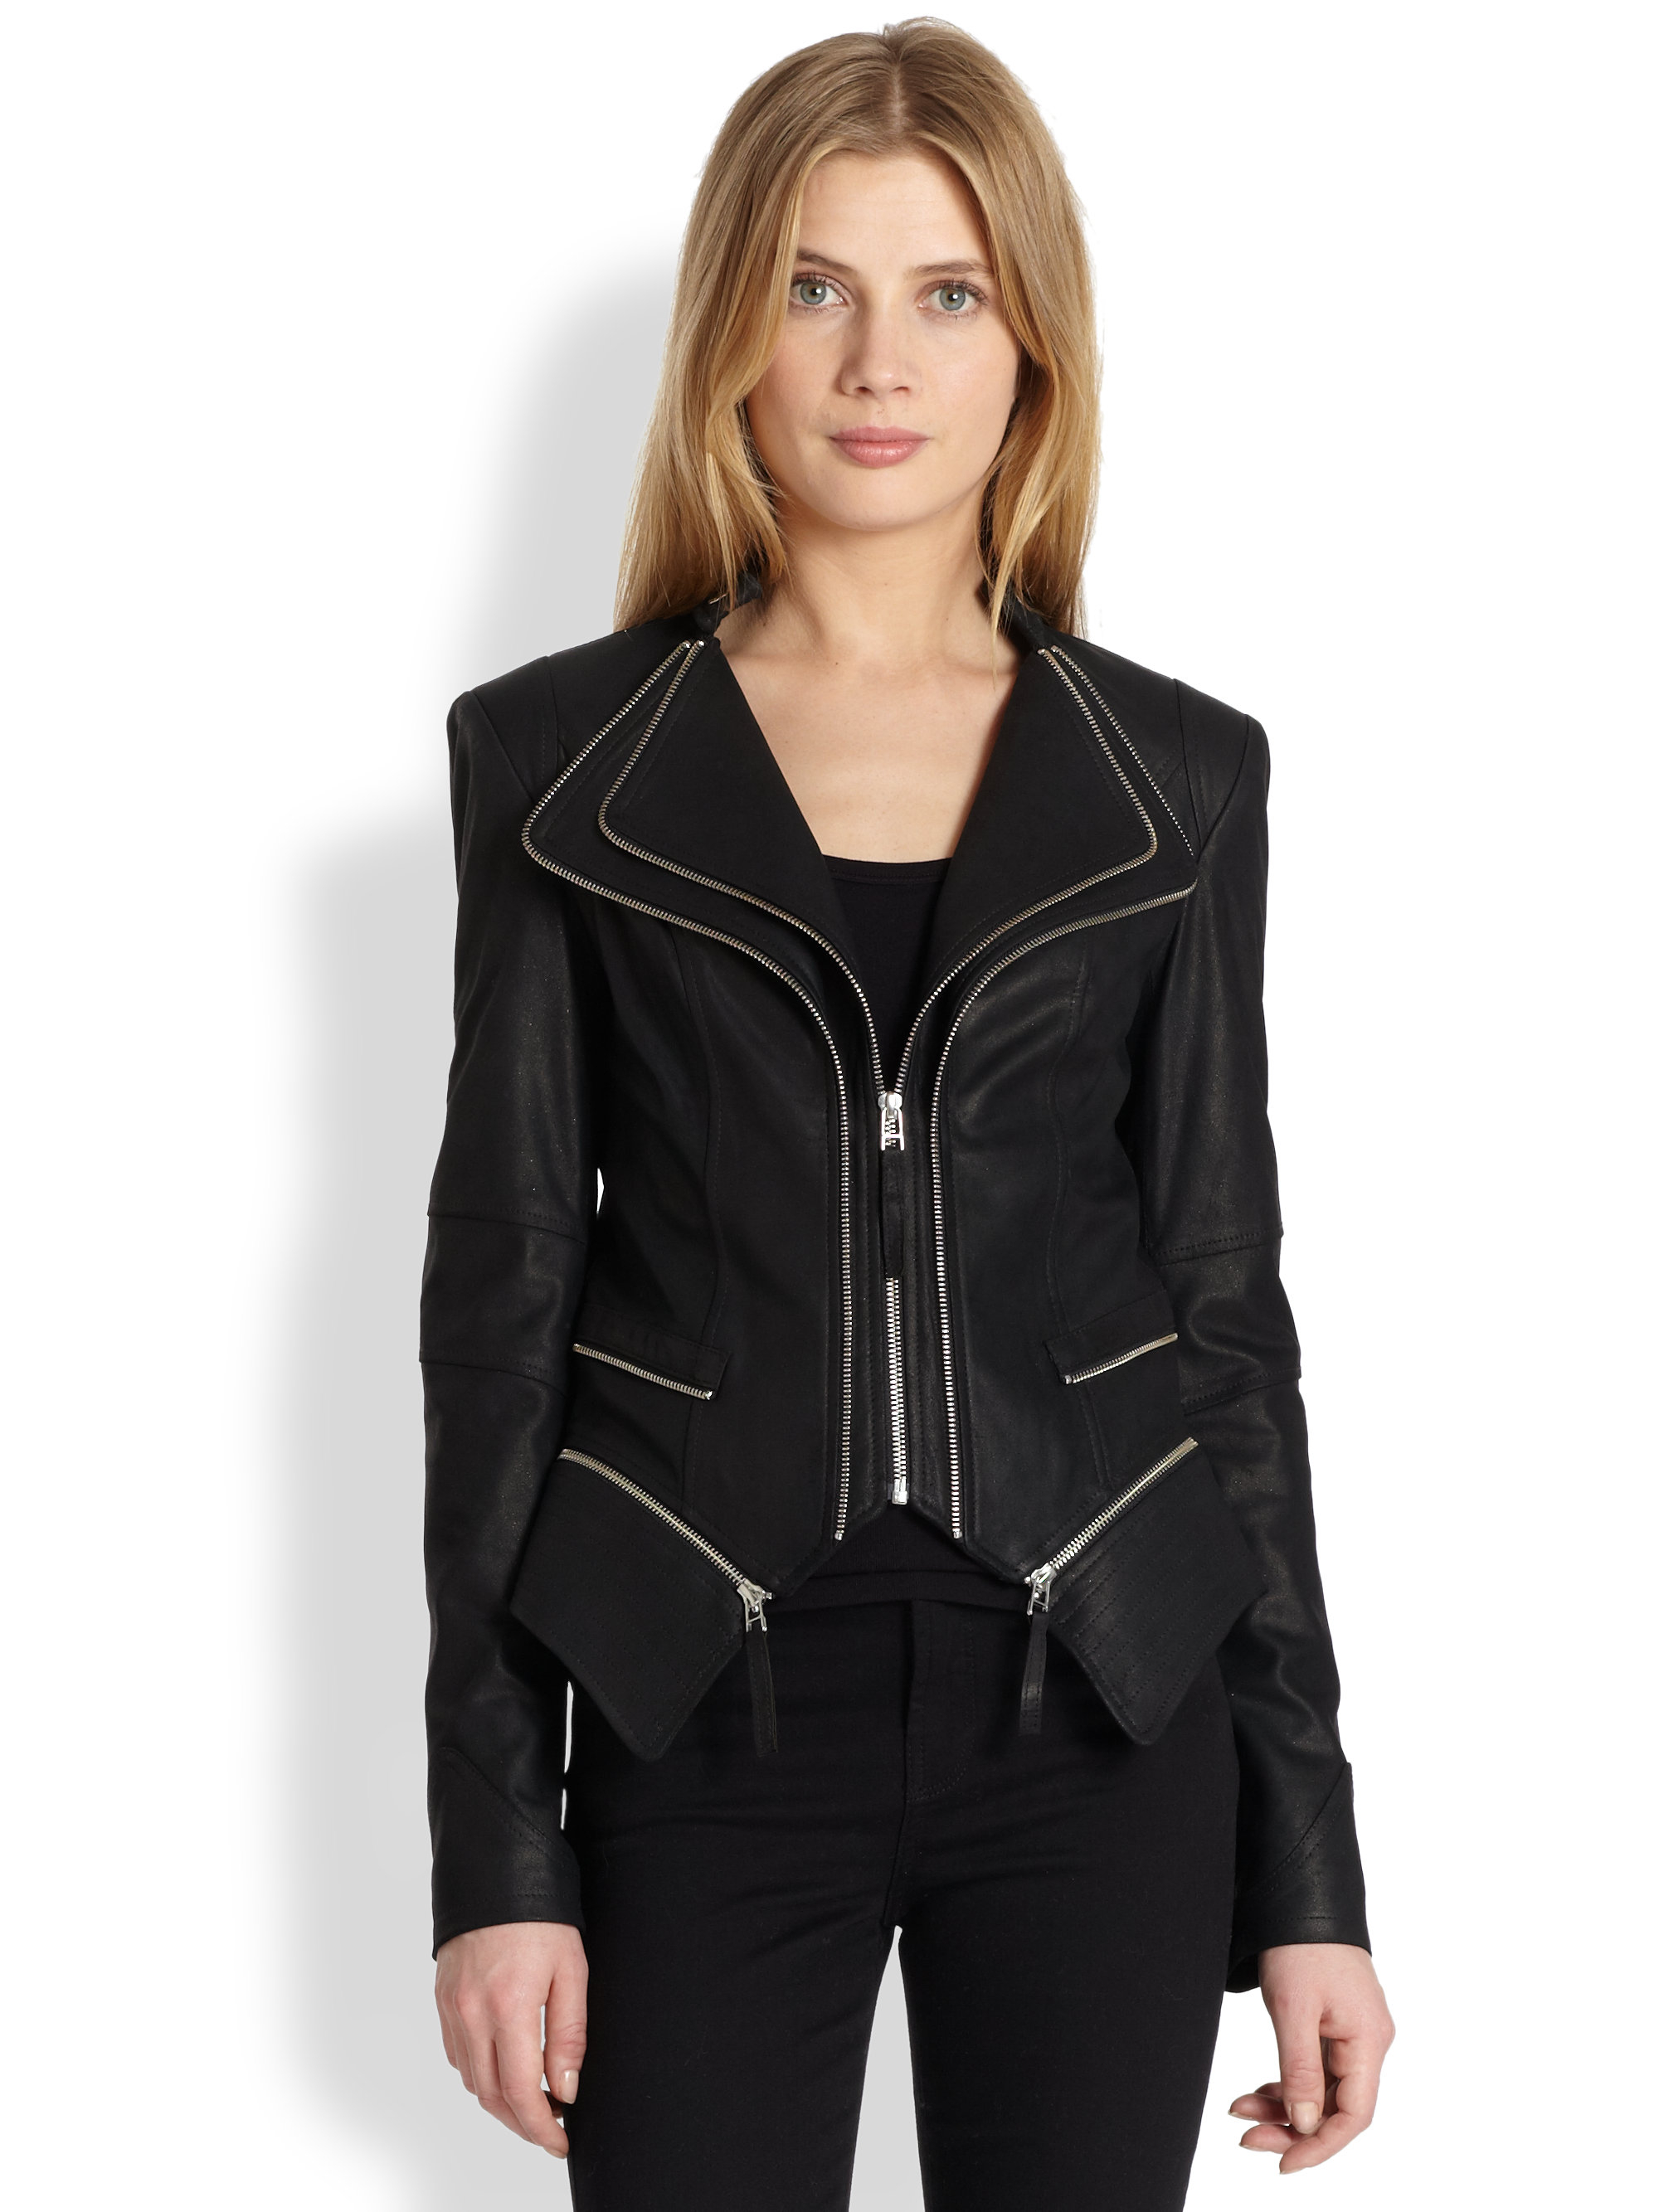 Lyst - Dawn Levy Leather Zipper Jacket in Black